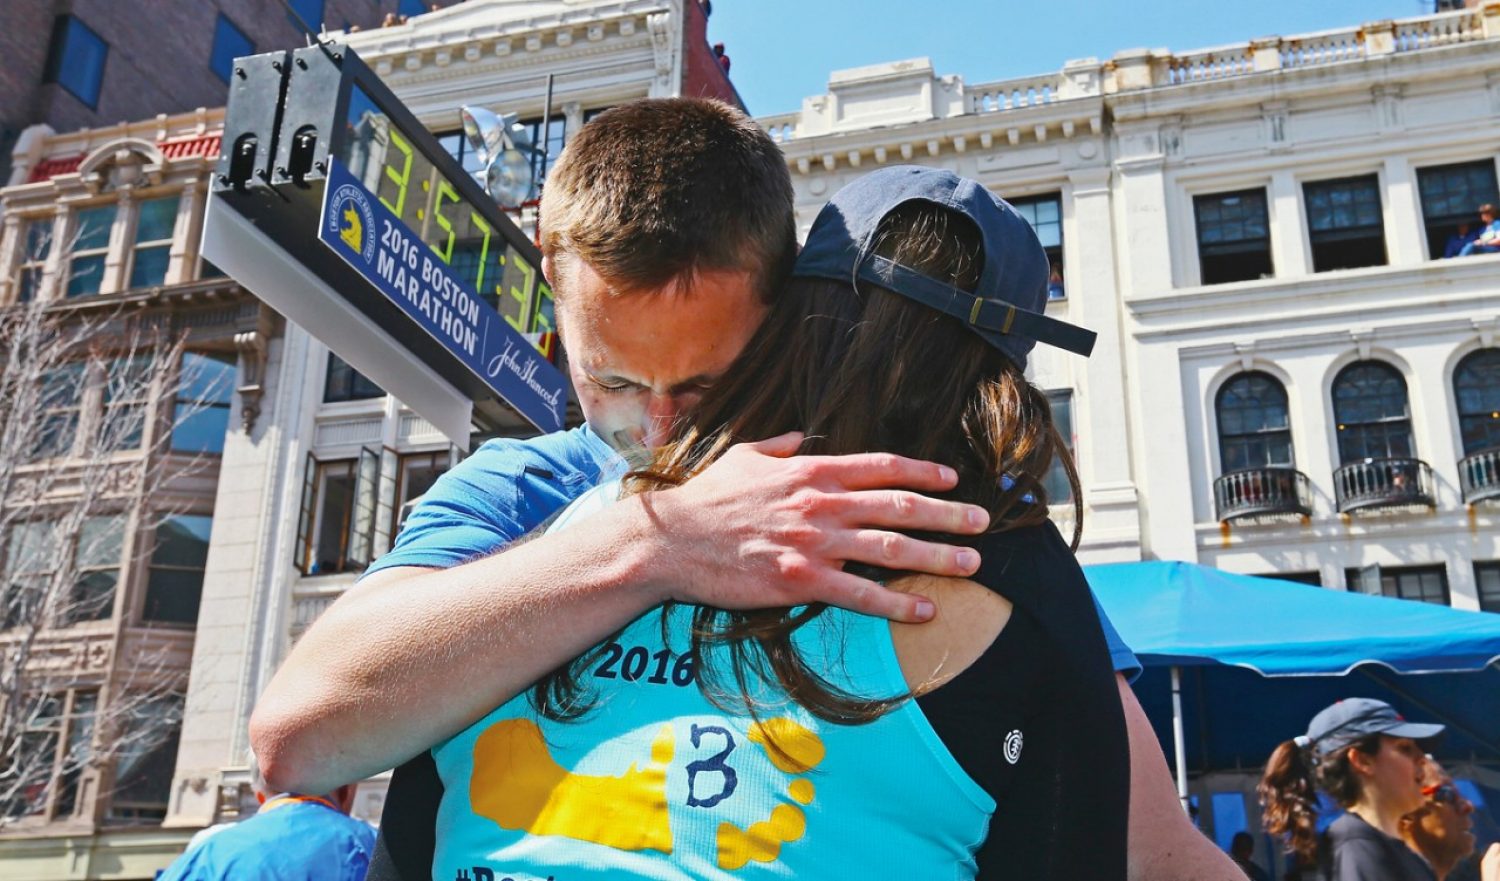 Patrick Downes and Jess Kensky after Patrick finishes the 2016 Boston Marathon